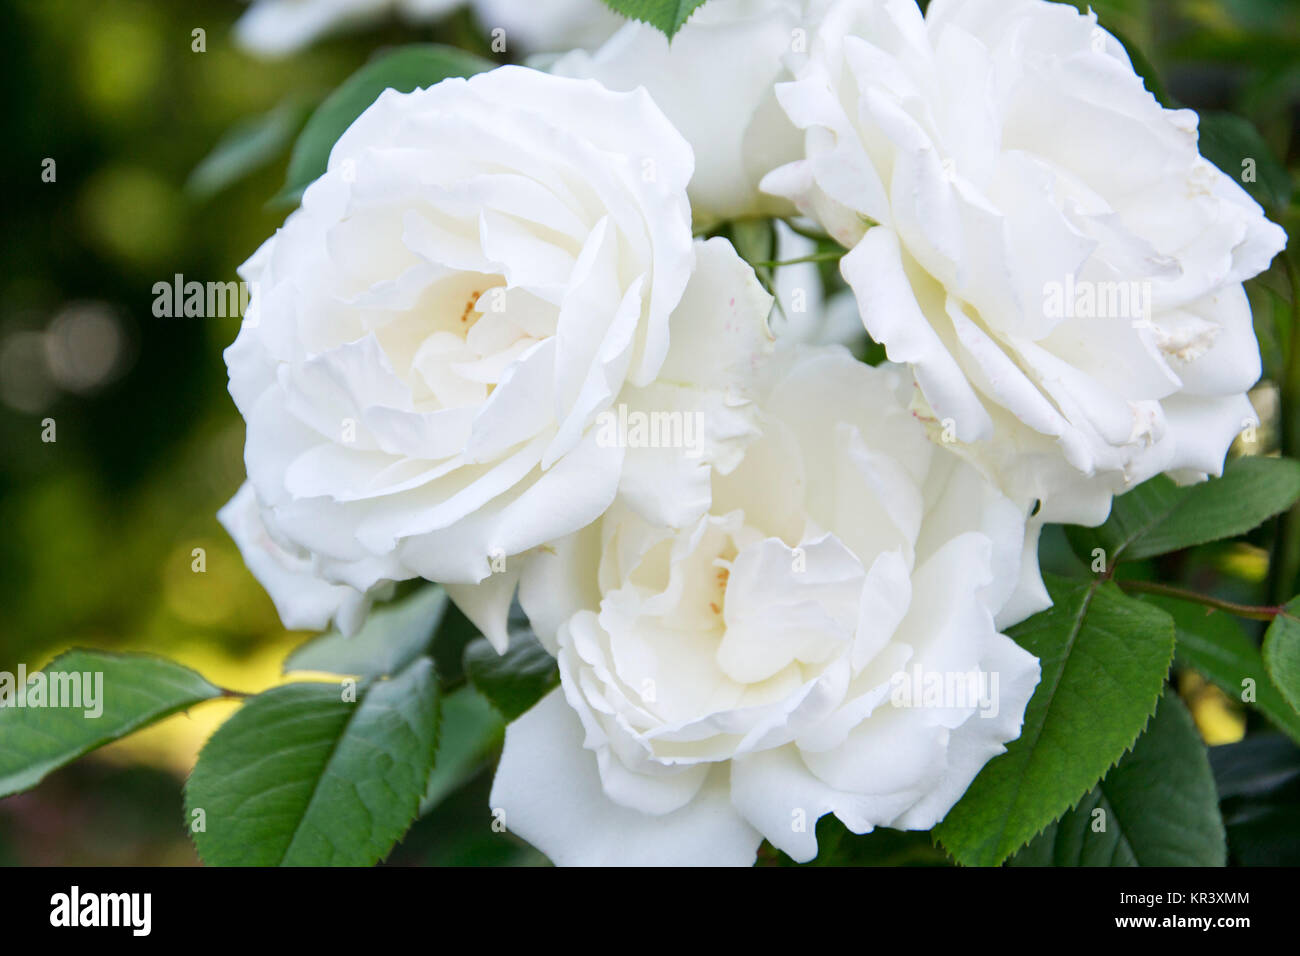 princess of wales rose Stock Photo - Alamy